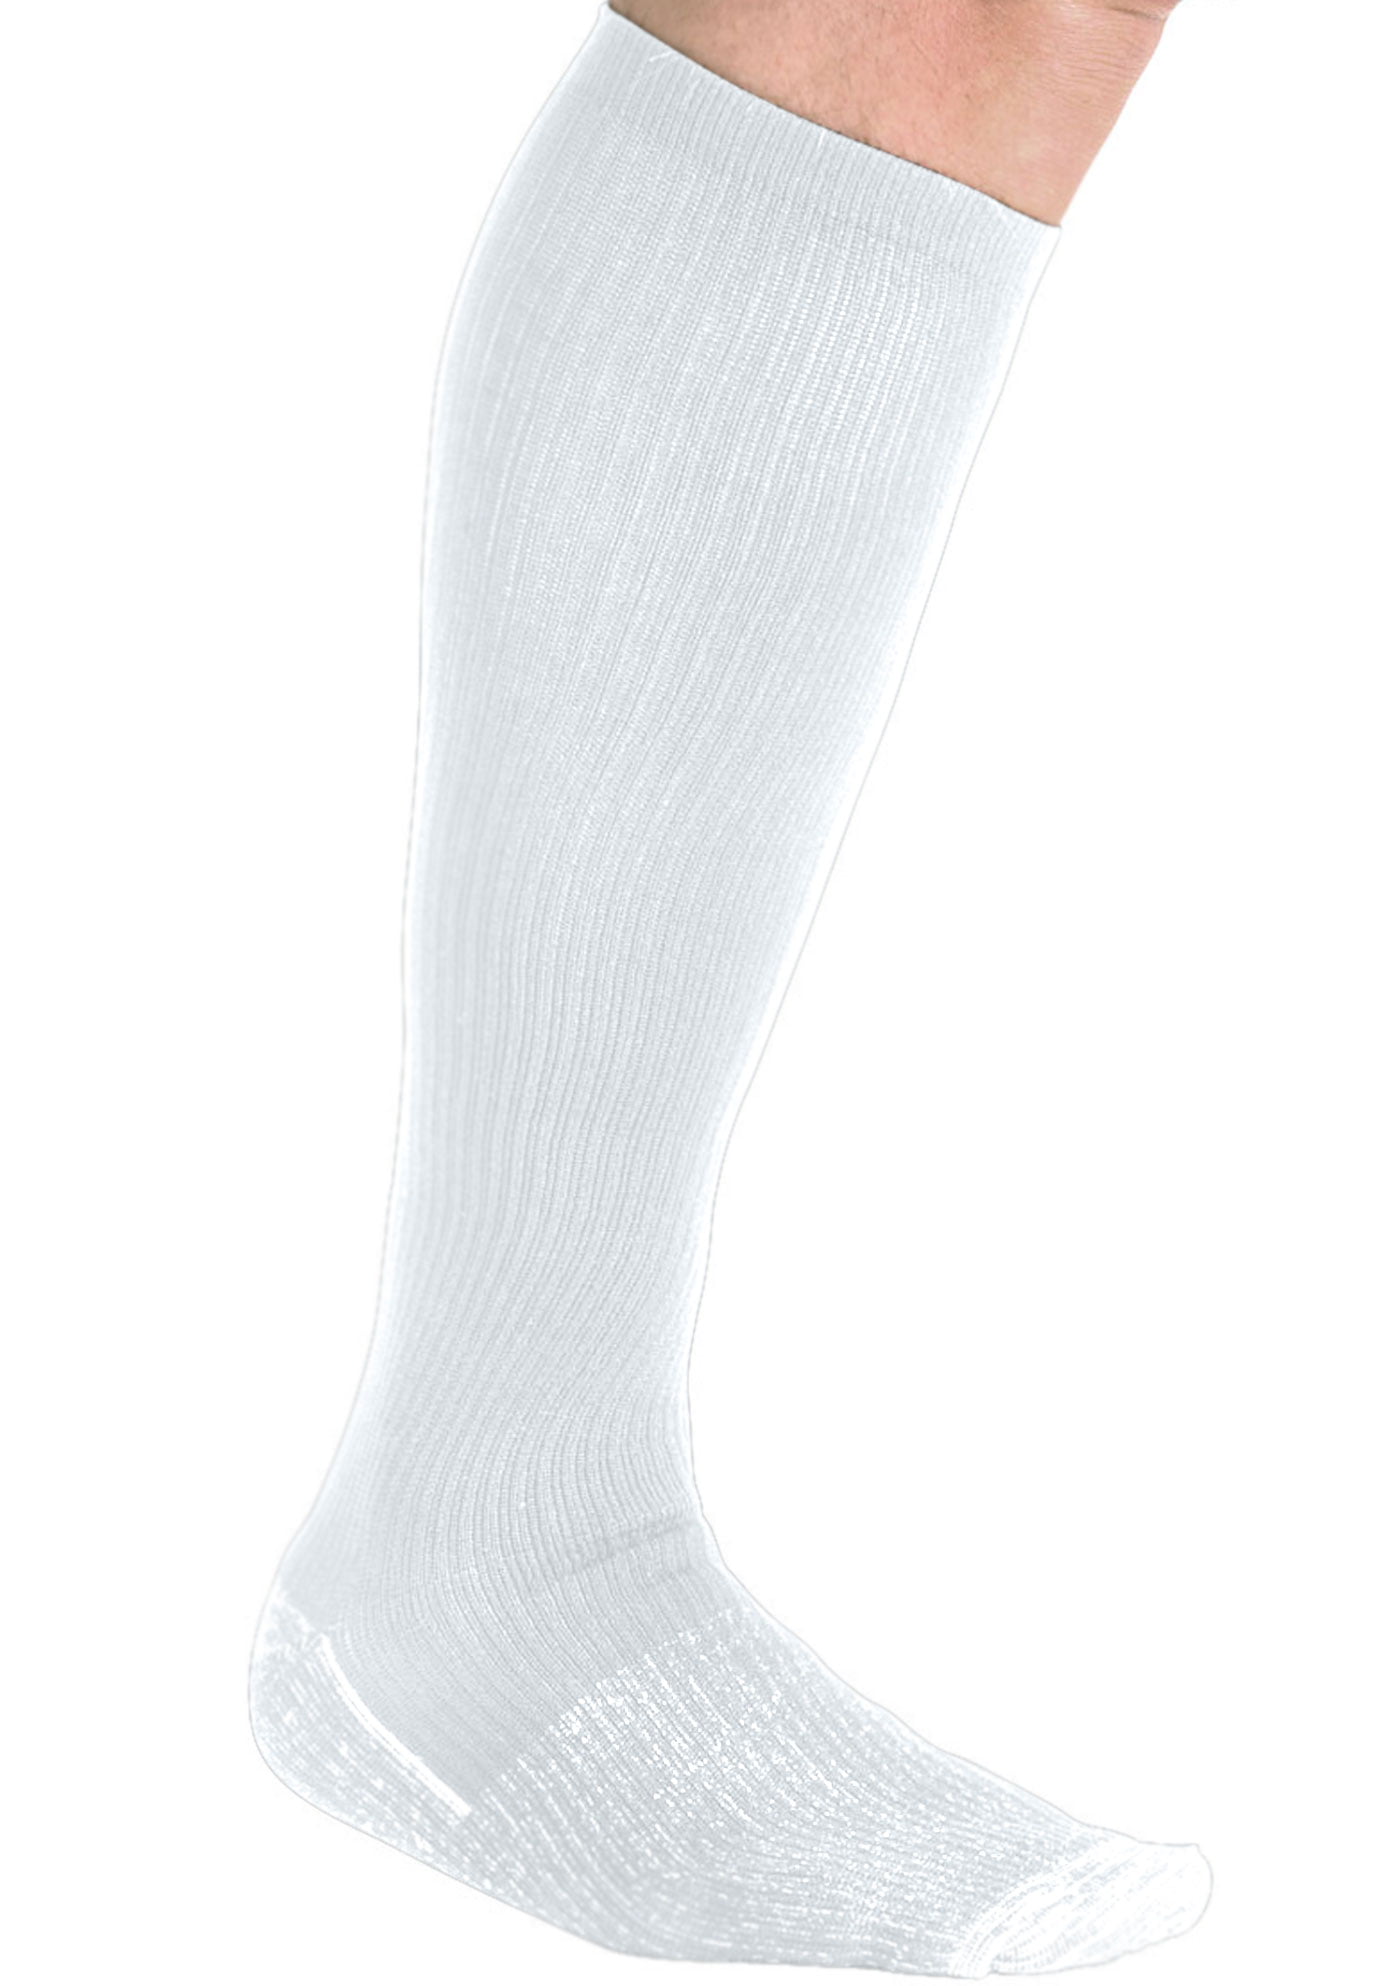 Mens Long Calf High Socks Texture stripe gray Compression Socks 